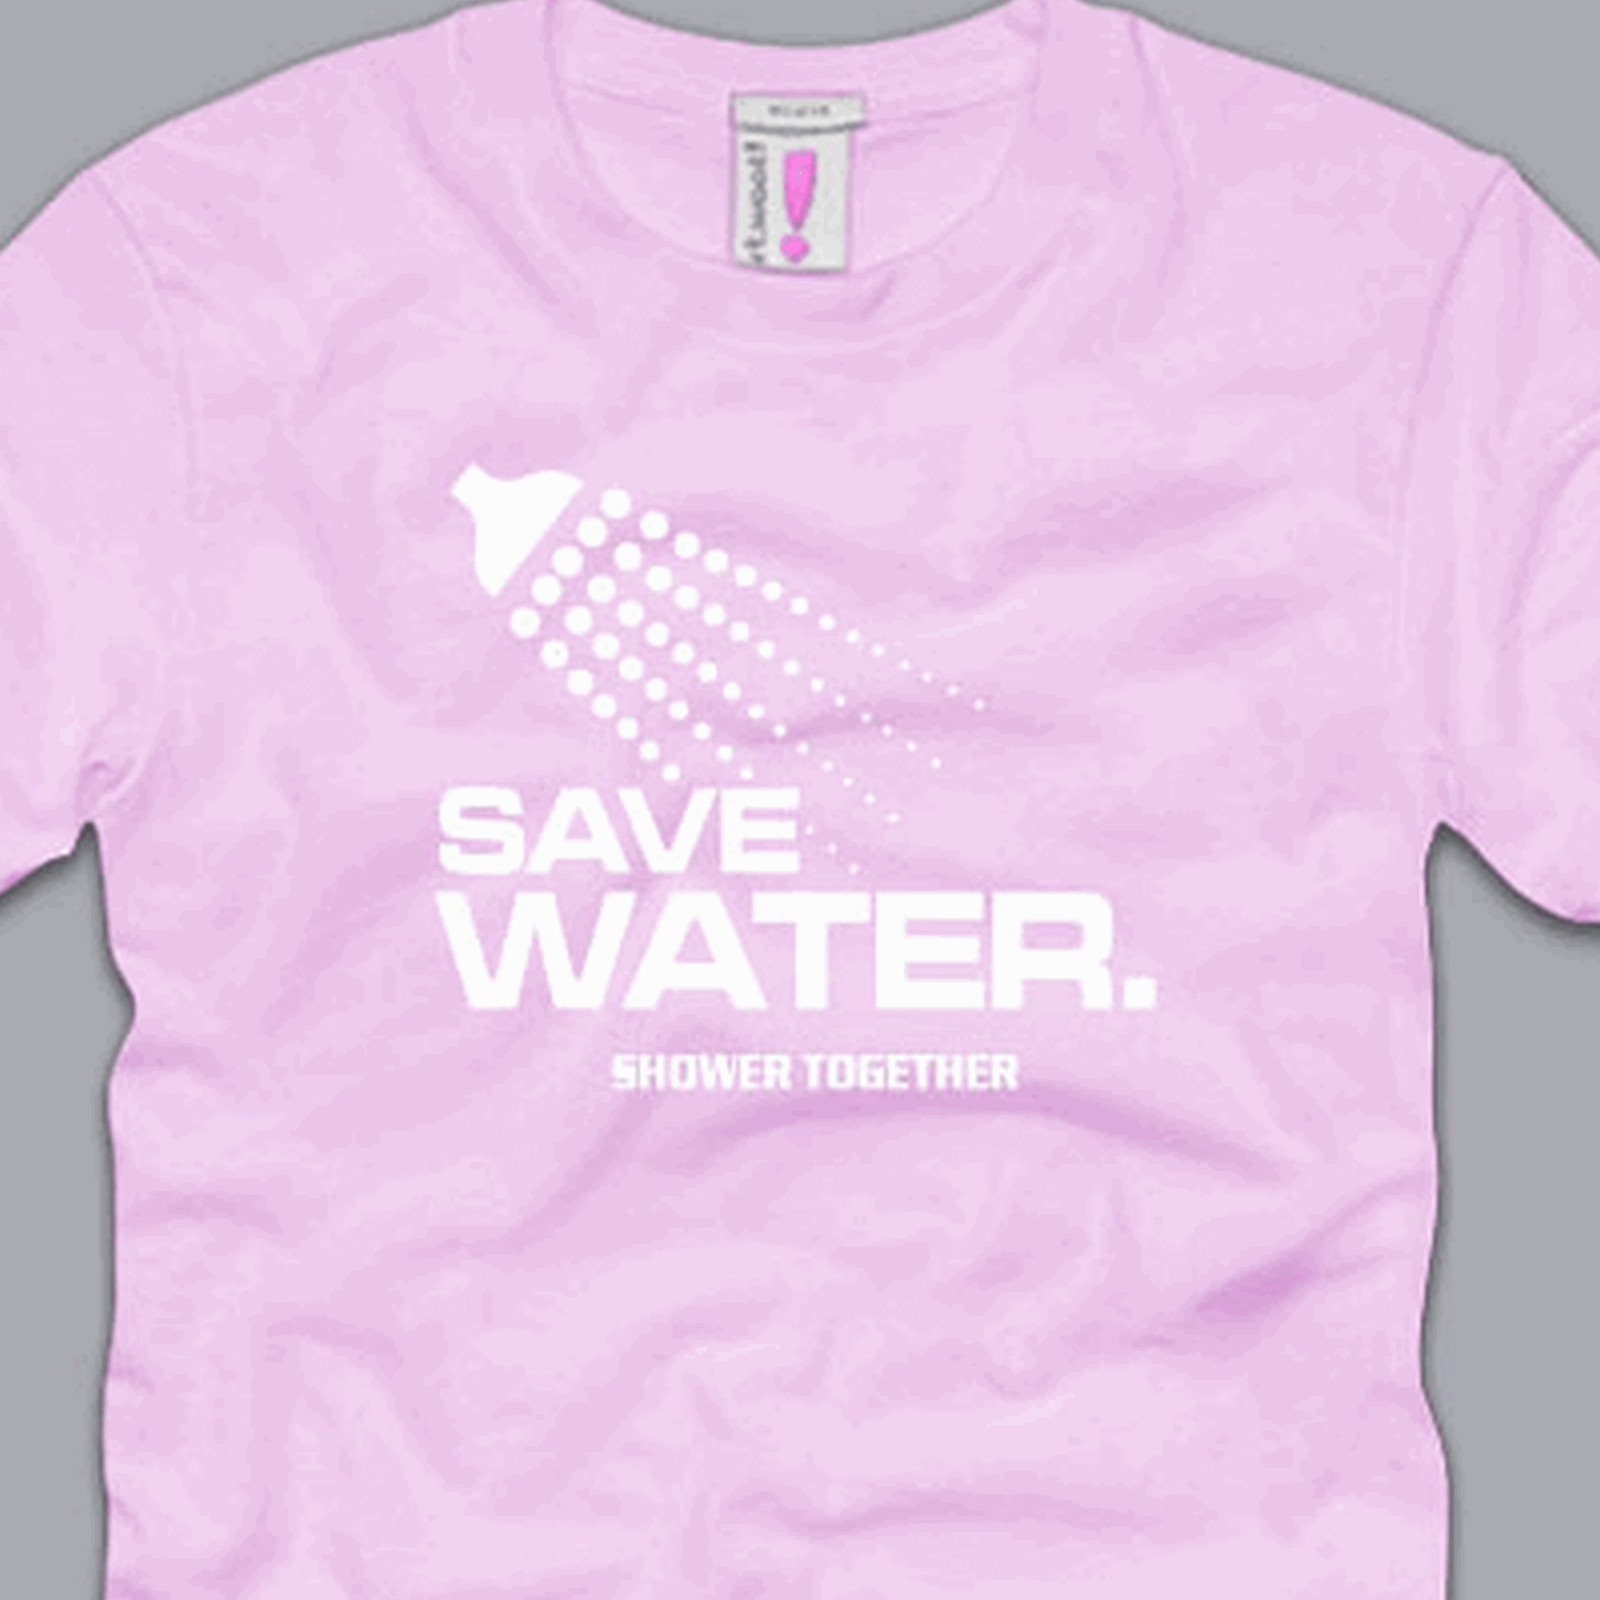 Save Water Shower Together S M L Xl 2xl 3xl T Shirt Funny Sex Humor Beer Keg Ebay 